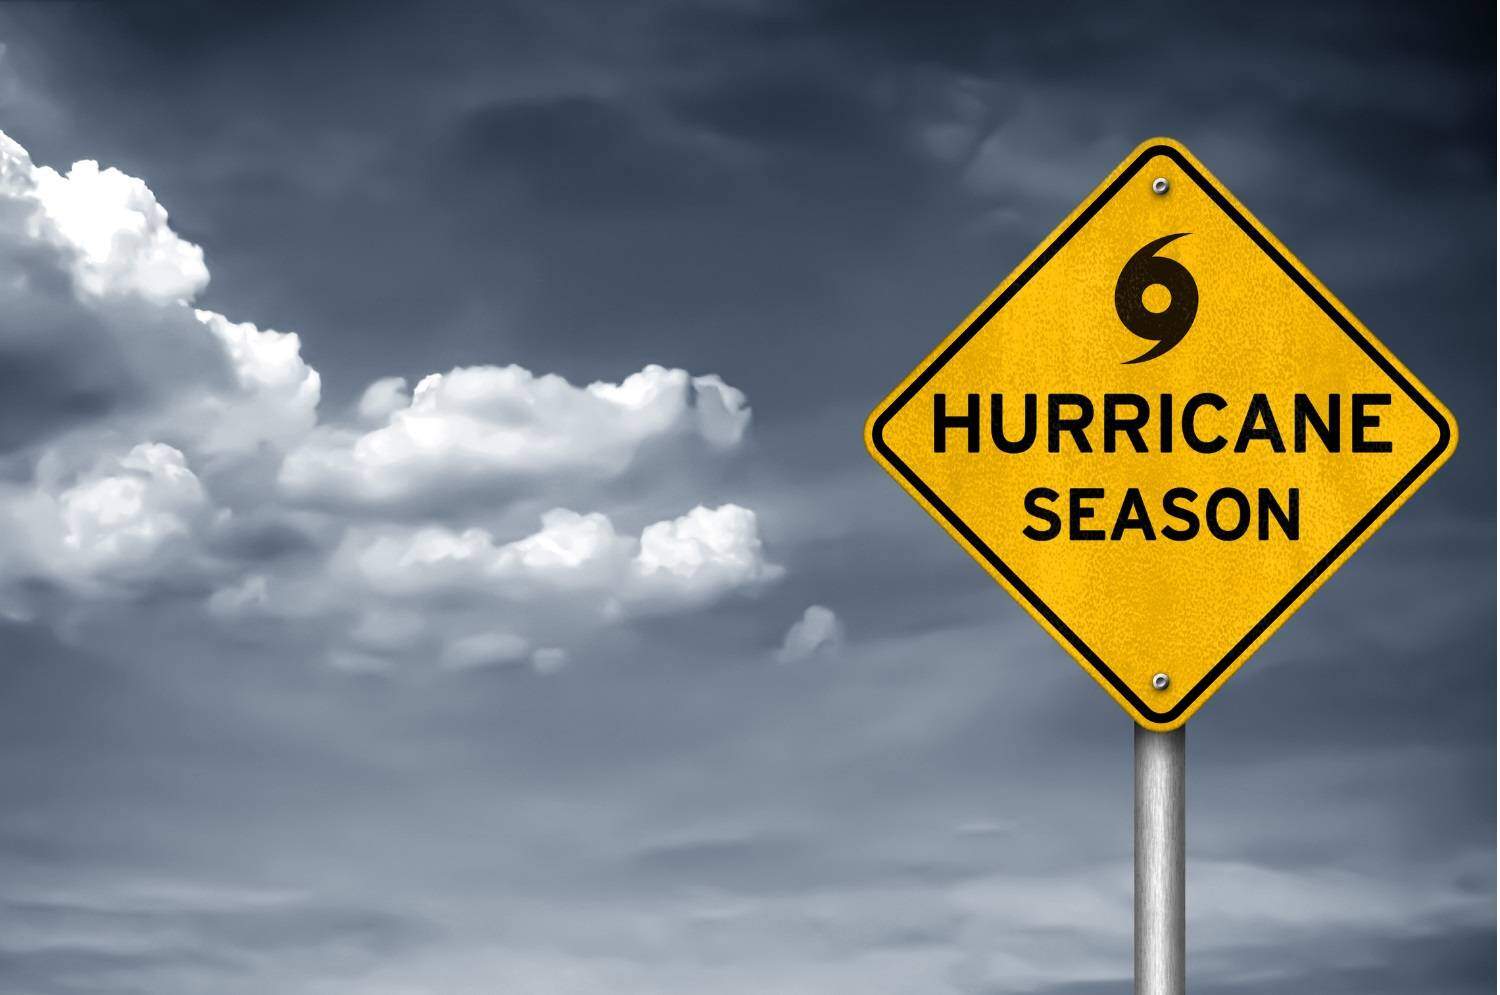 The 2020 Atlantic Hurricane Season